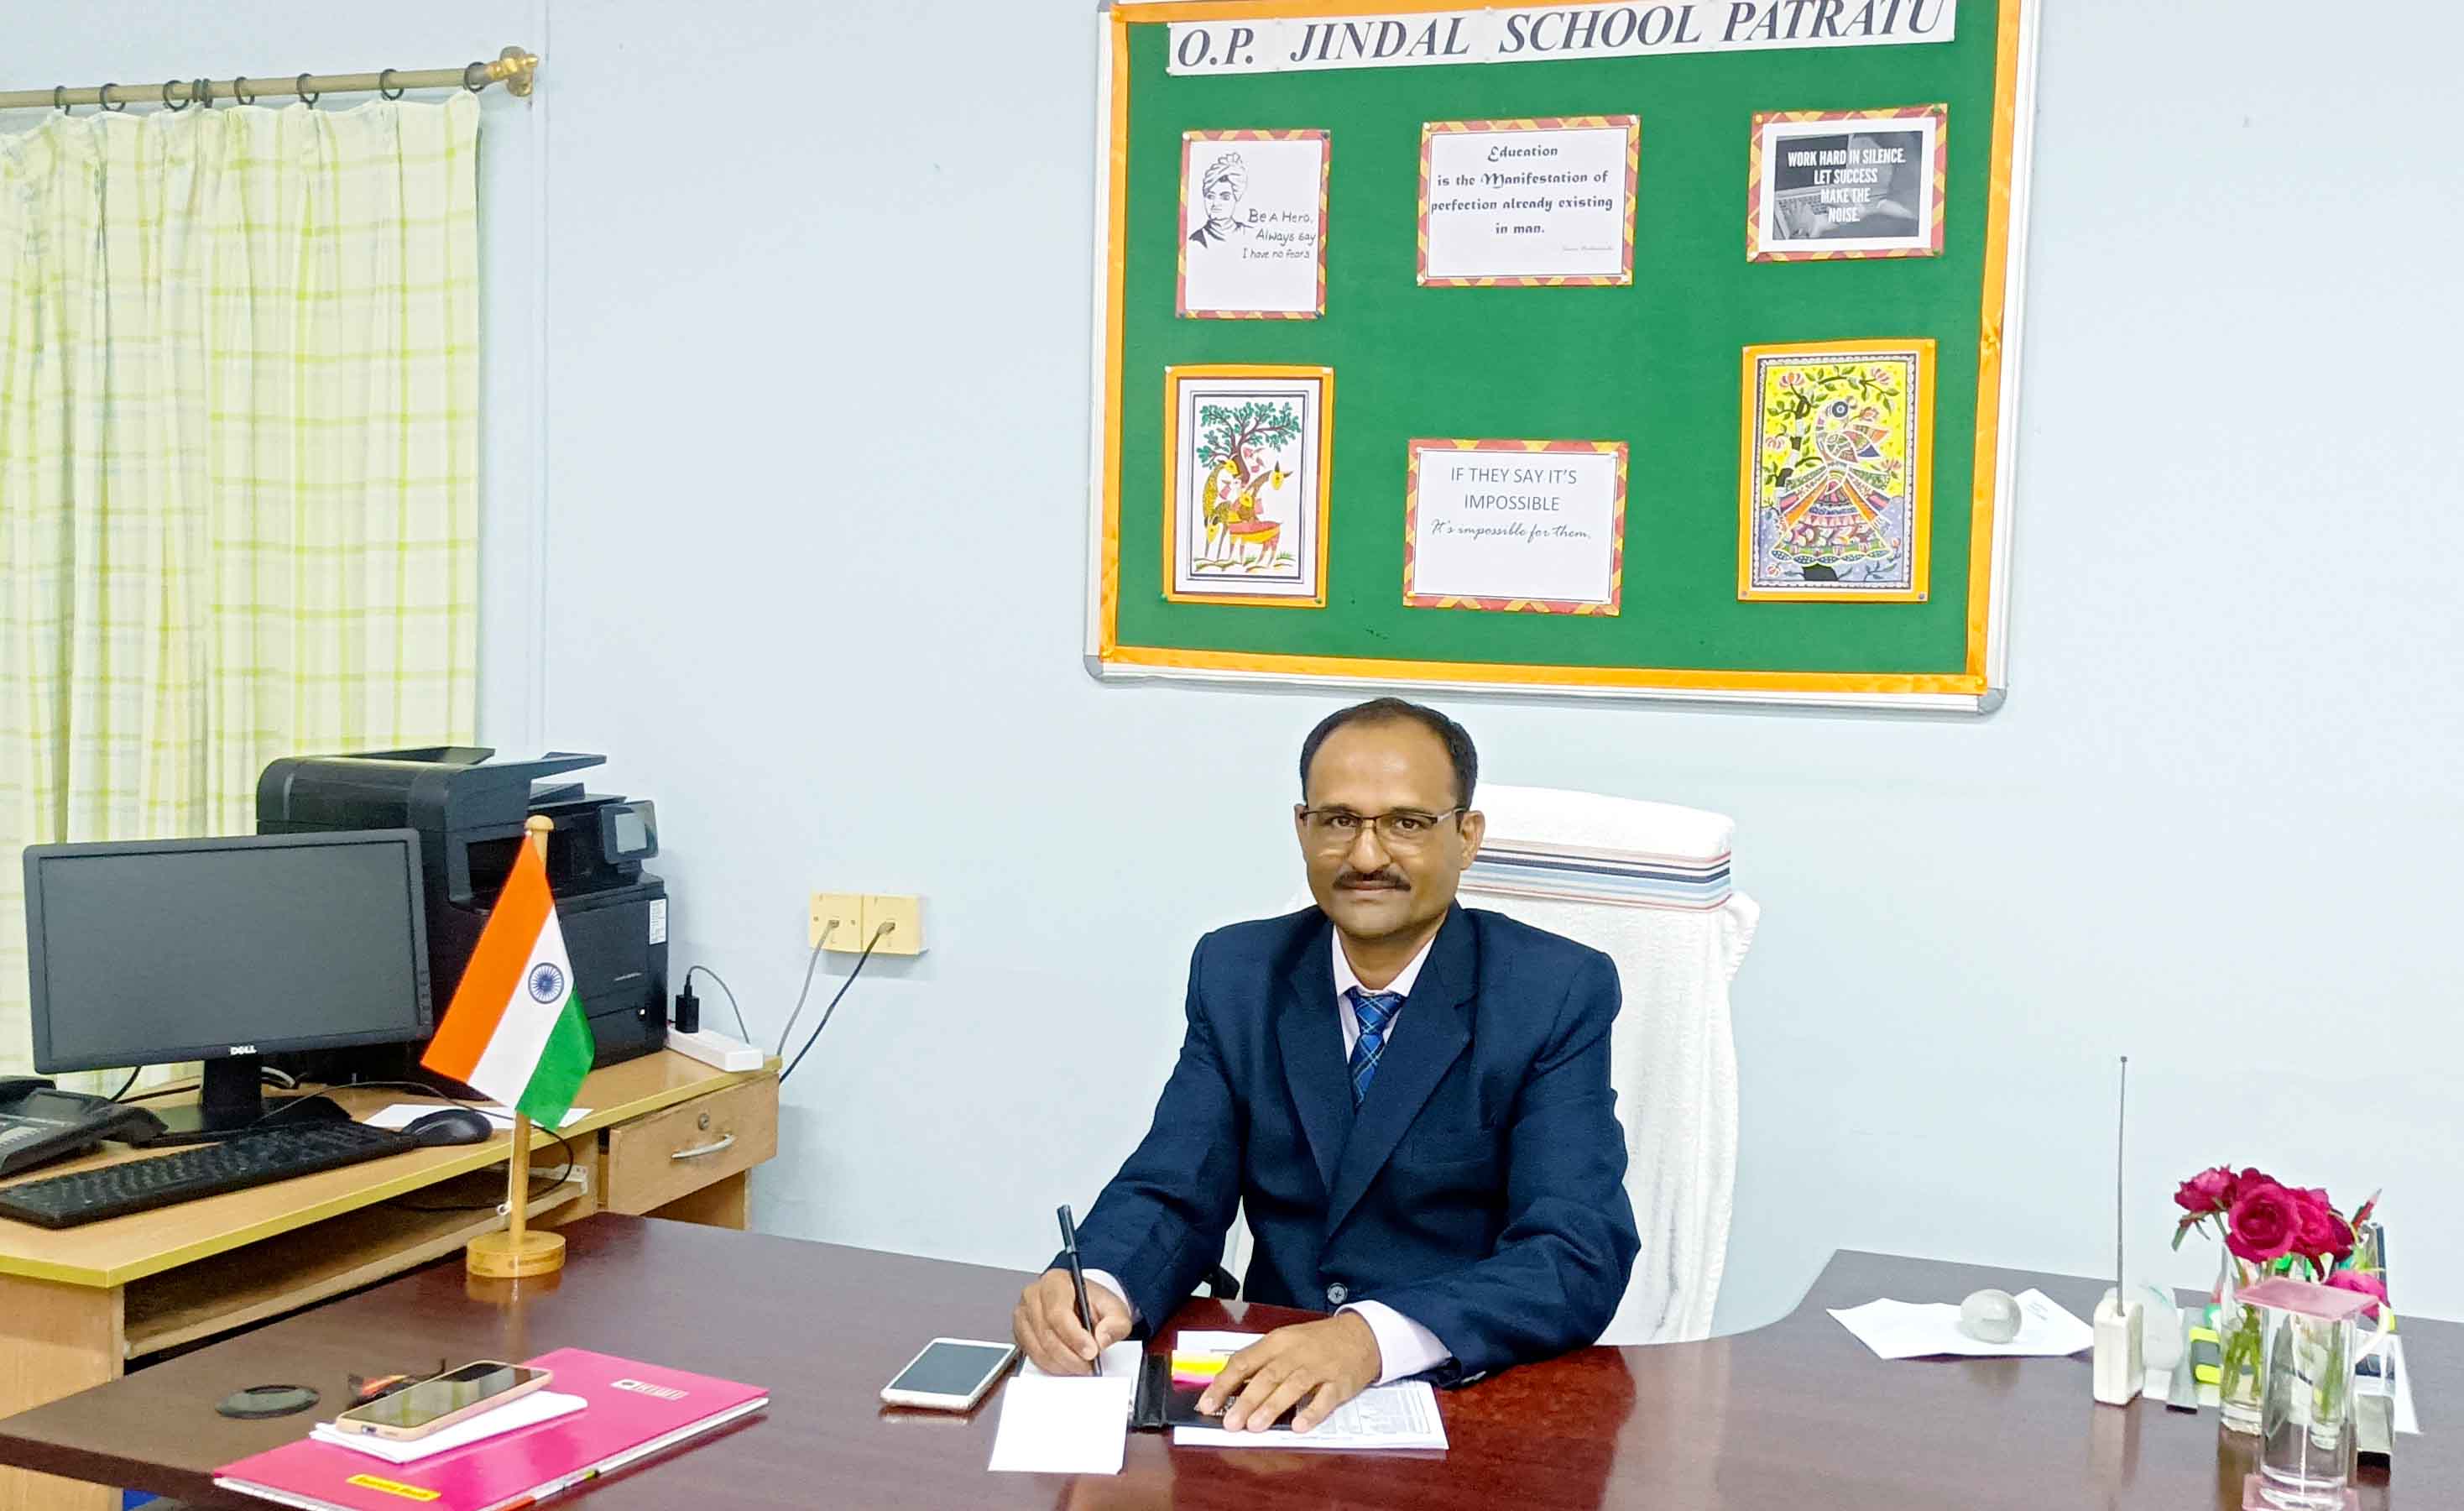 Mr. Gurudutta Pandey, Principal